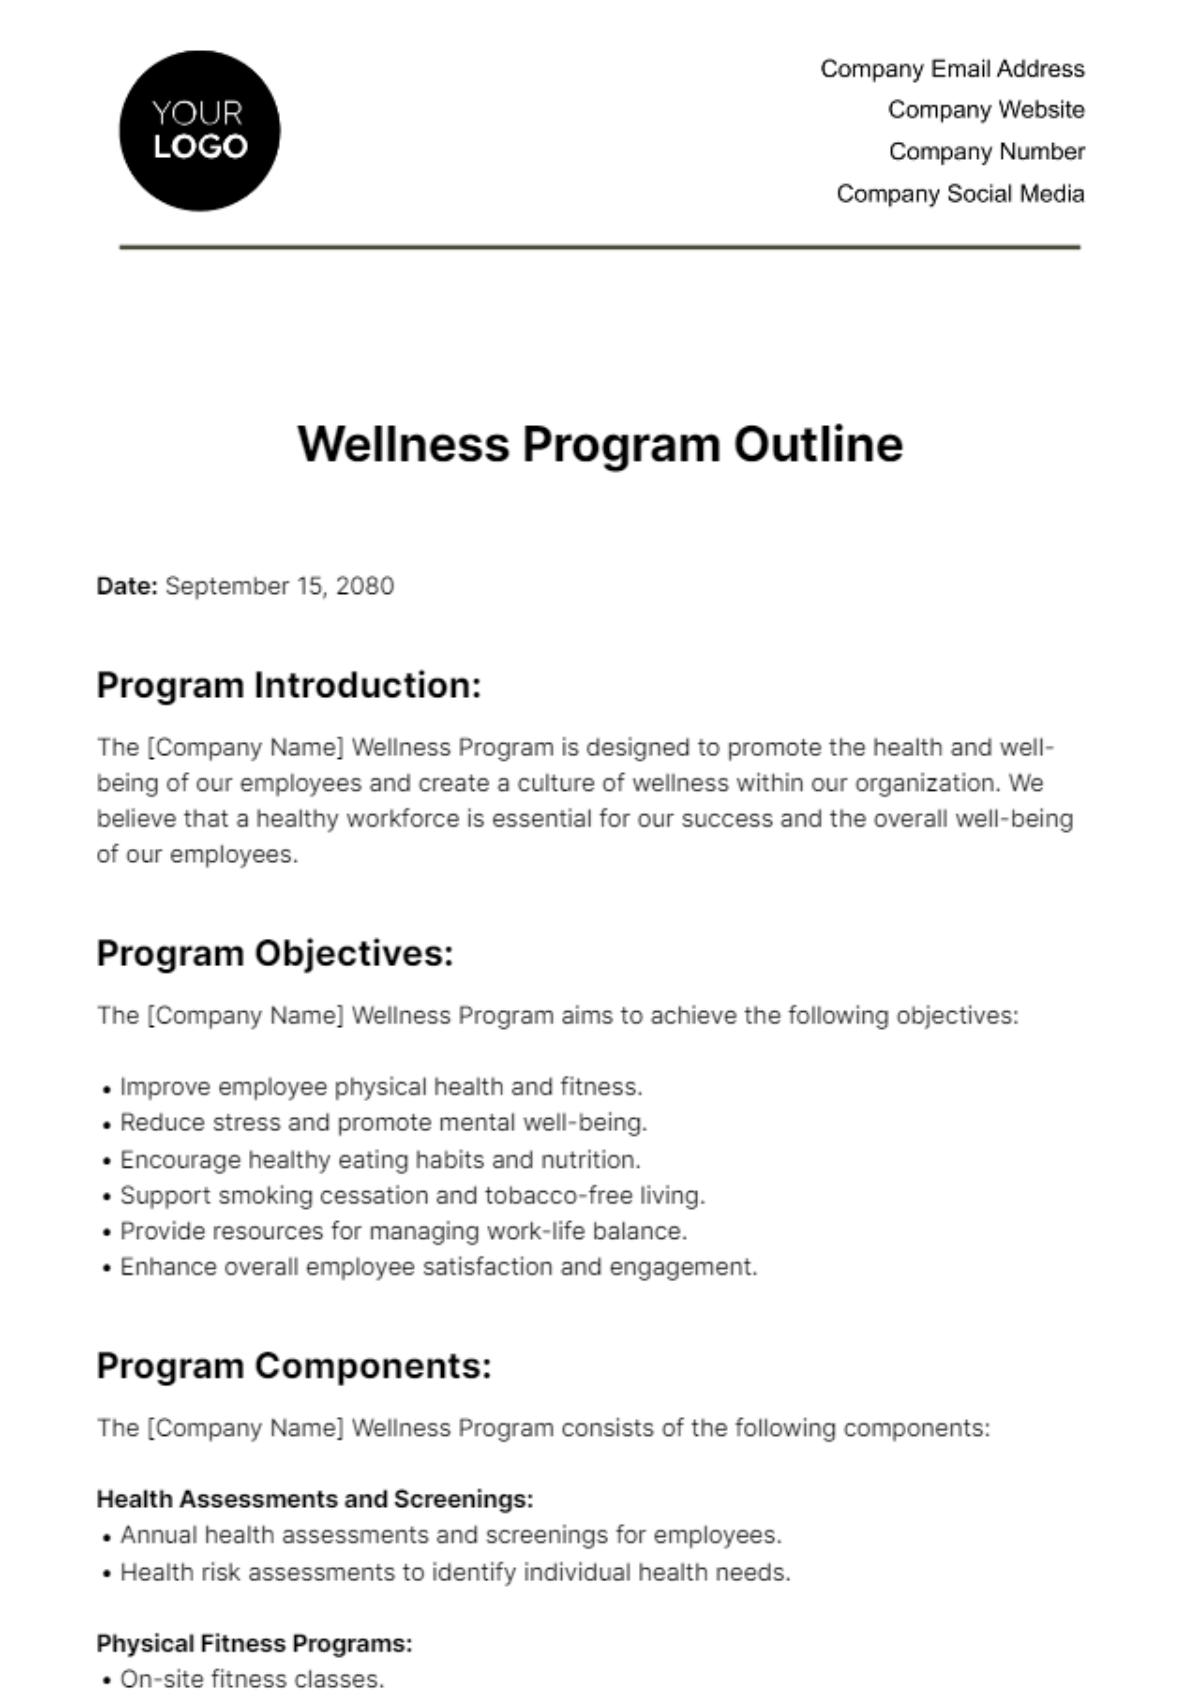 Free Wellness Program Outline HR Template